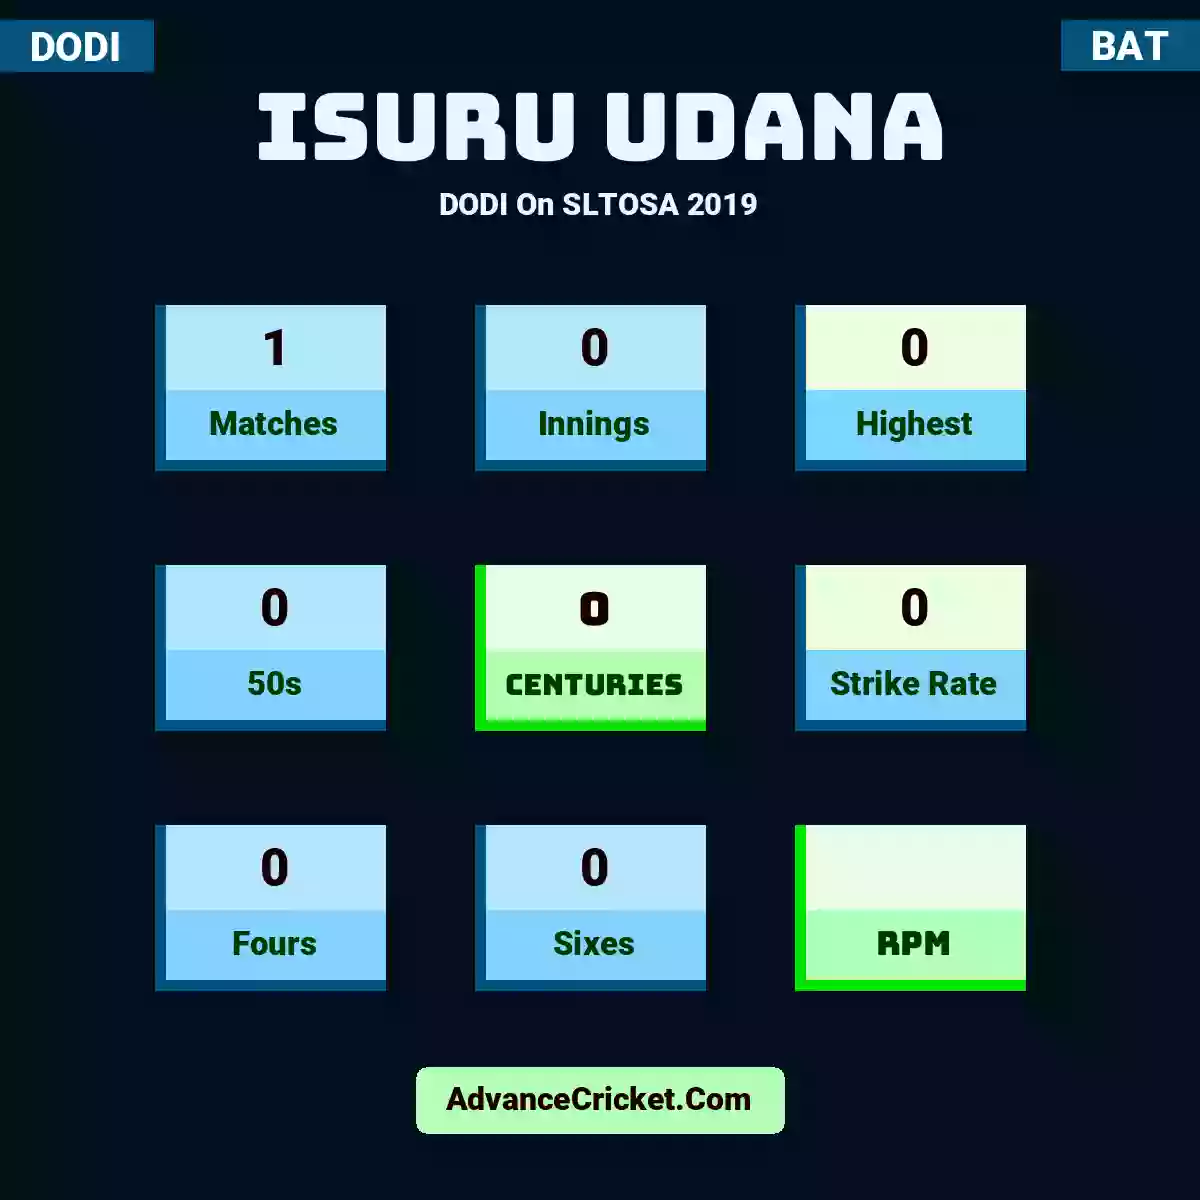 Isuru Udana DODI  On SLTOSA 2019, Isuru Udana played 1 matches, scored 0 runs as highest, 0 half-centuries, and 0 centuries, with a strike rate of 0. I.Udana hit 0 fours and 0 sixes.